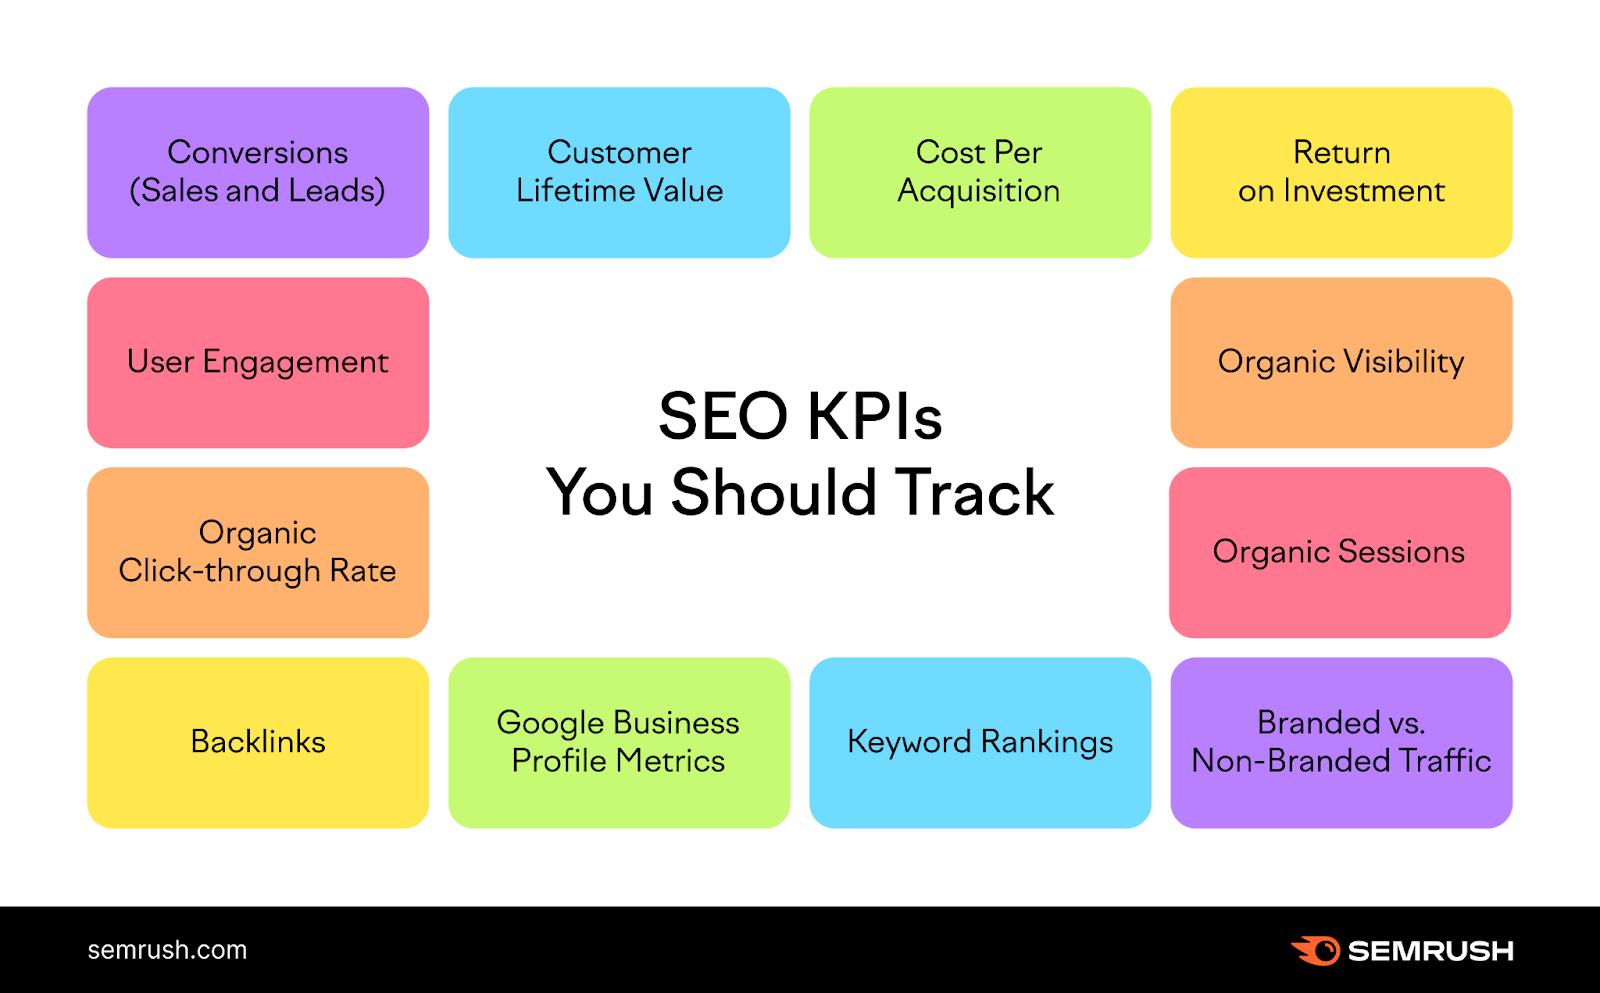 An image listing 12 SEO KPIs